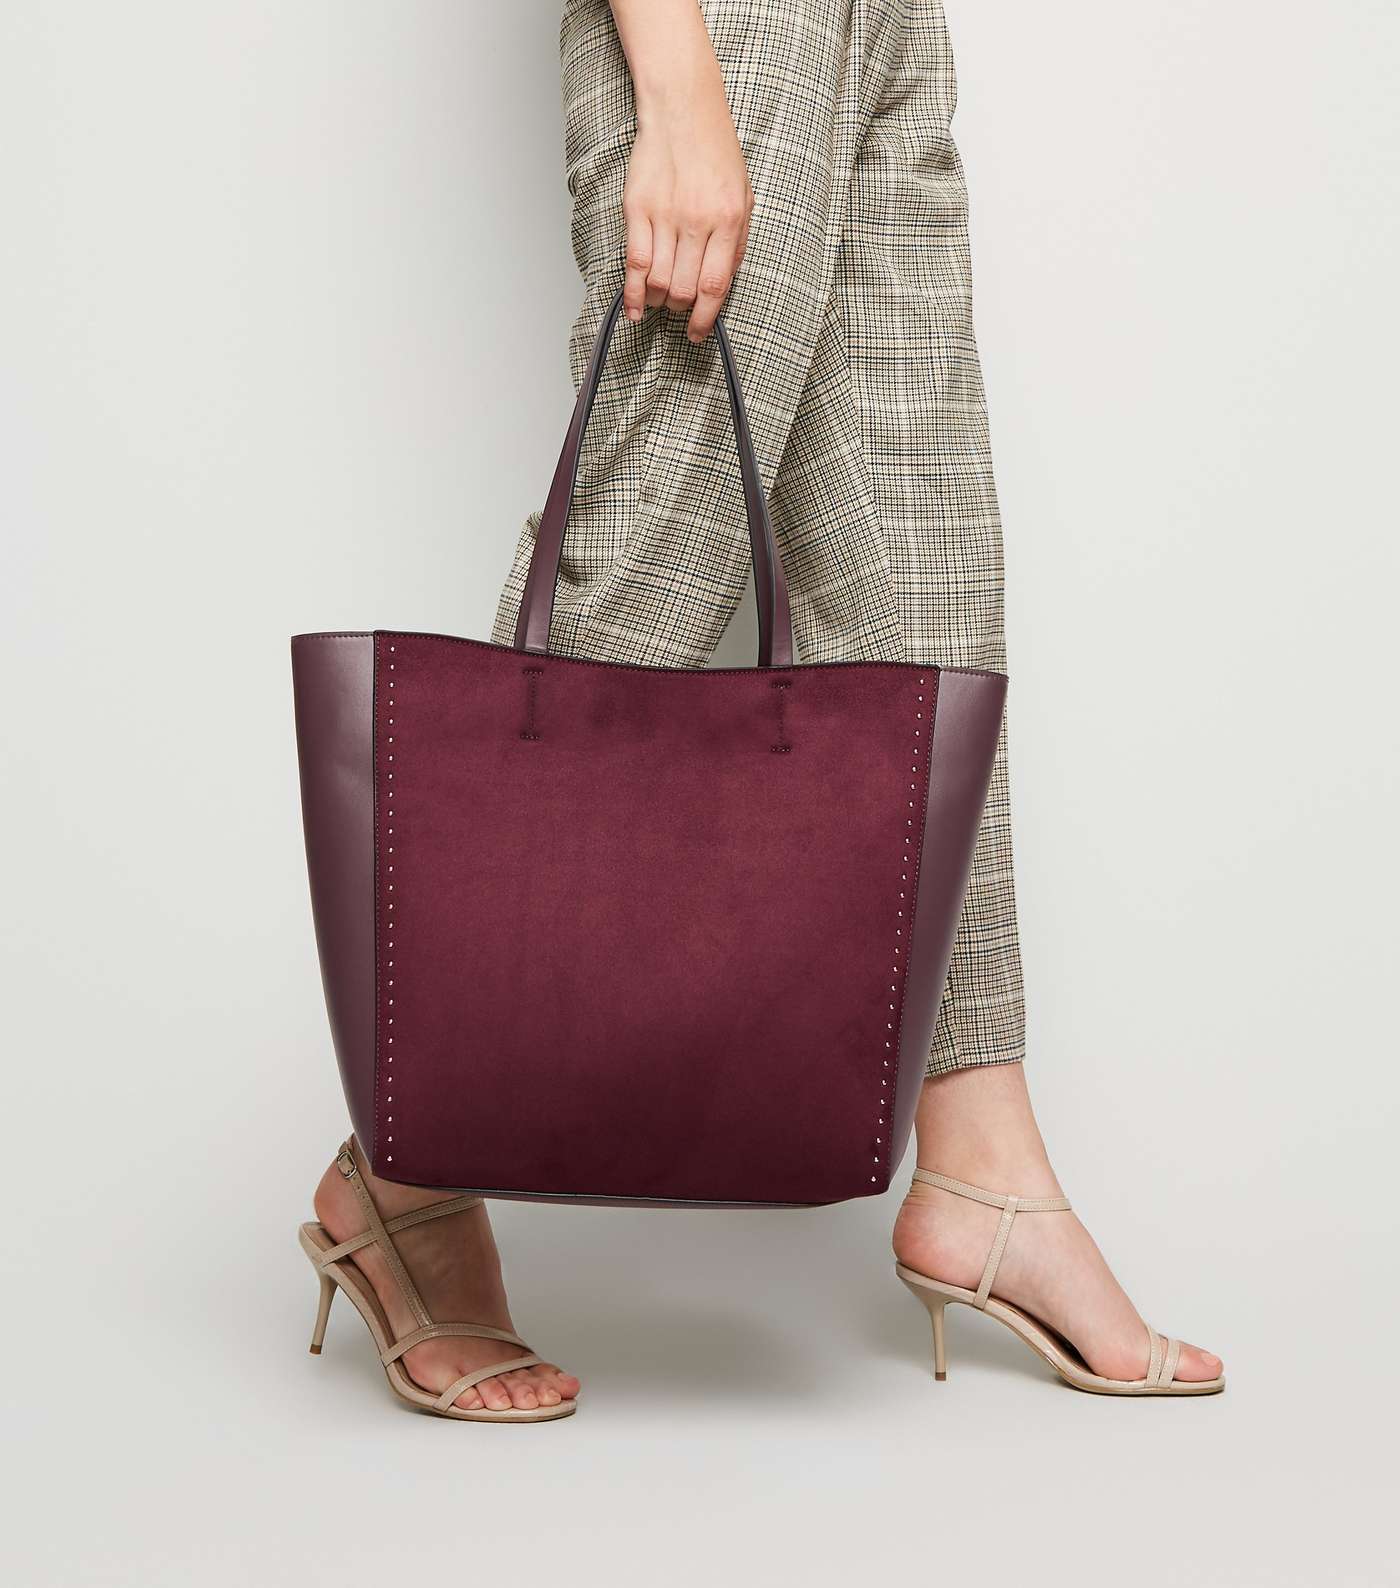 Burgundy Studded Tote Bag with Detachable Purse Image 2